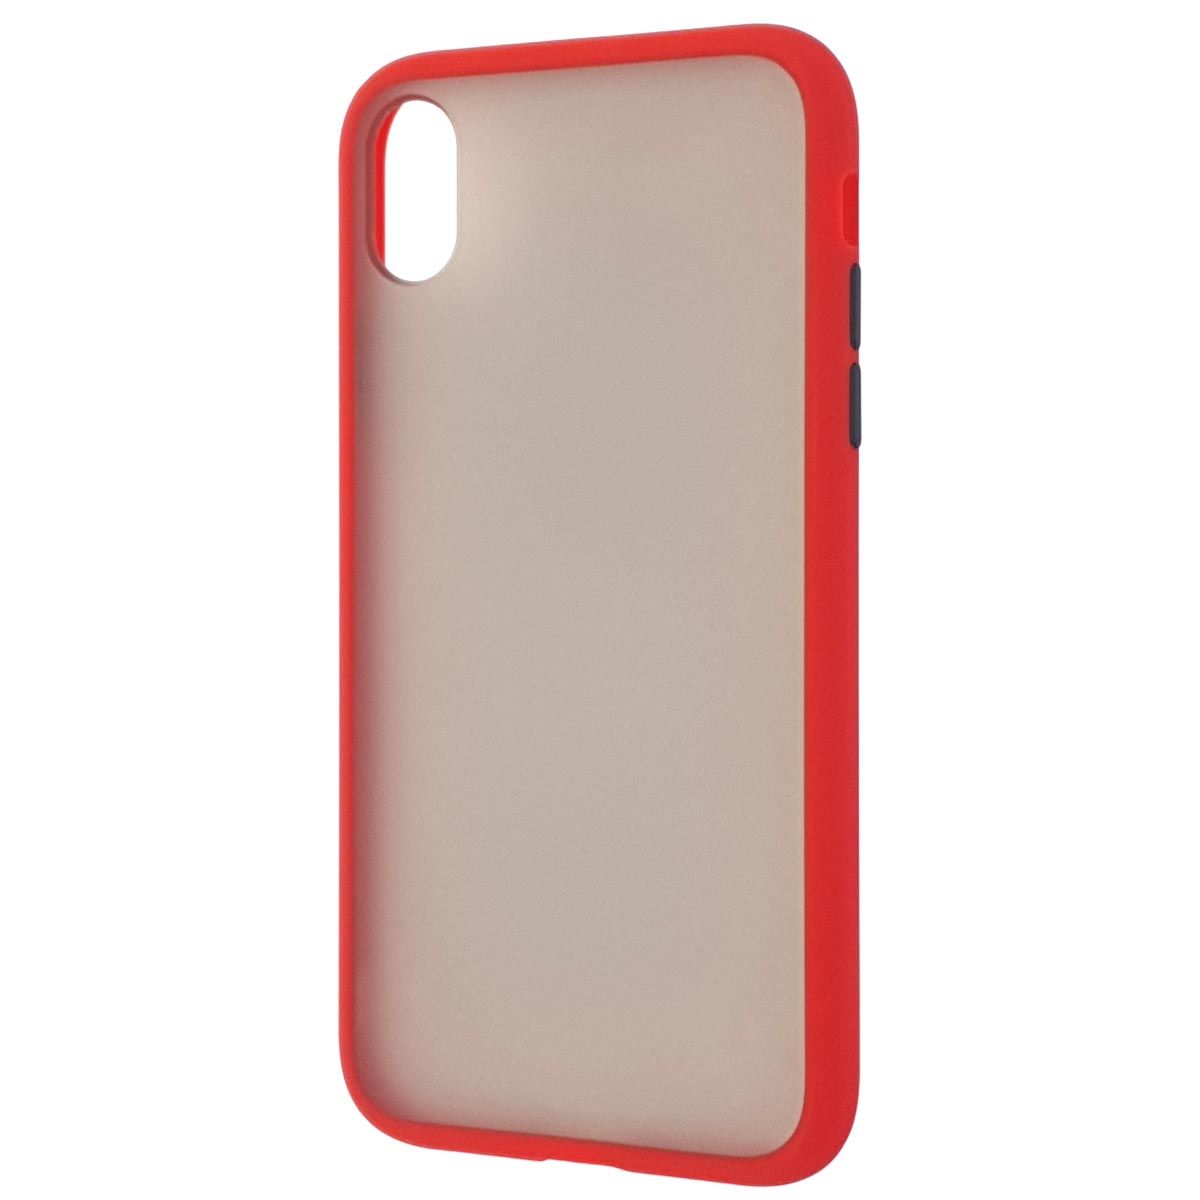 Чехол накладка SKIN SHELL для APPLE iPhone XR, силикон, пластик, цвет окантовки красный